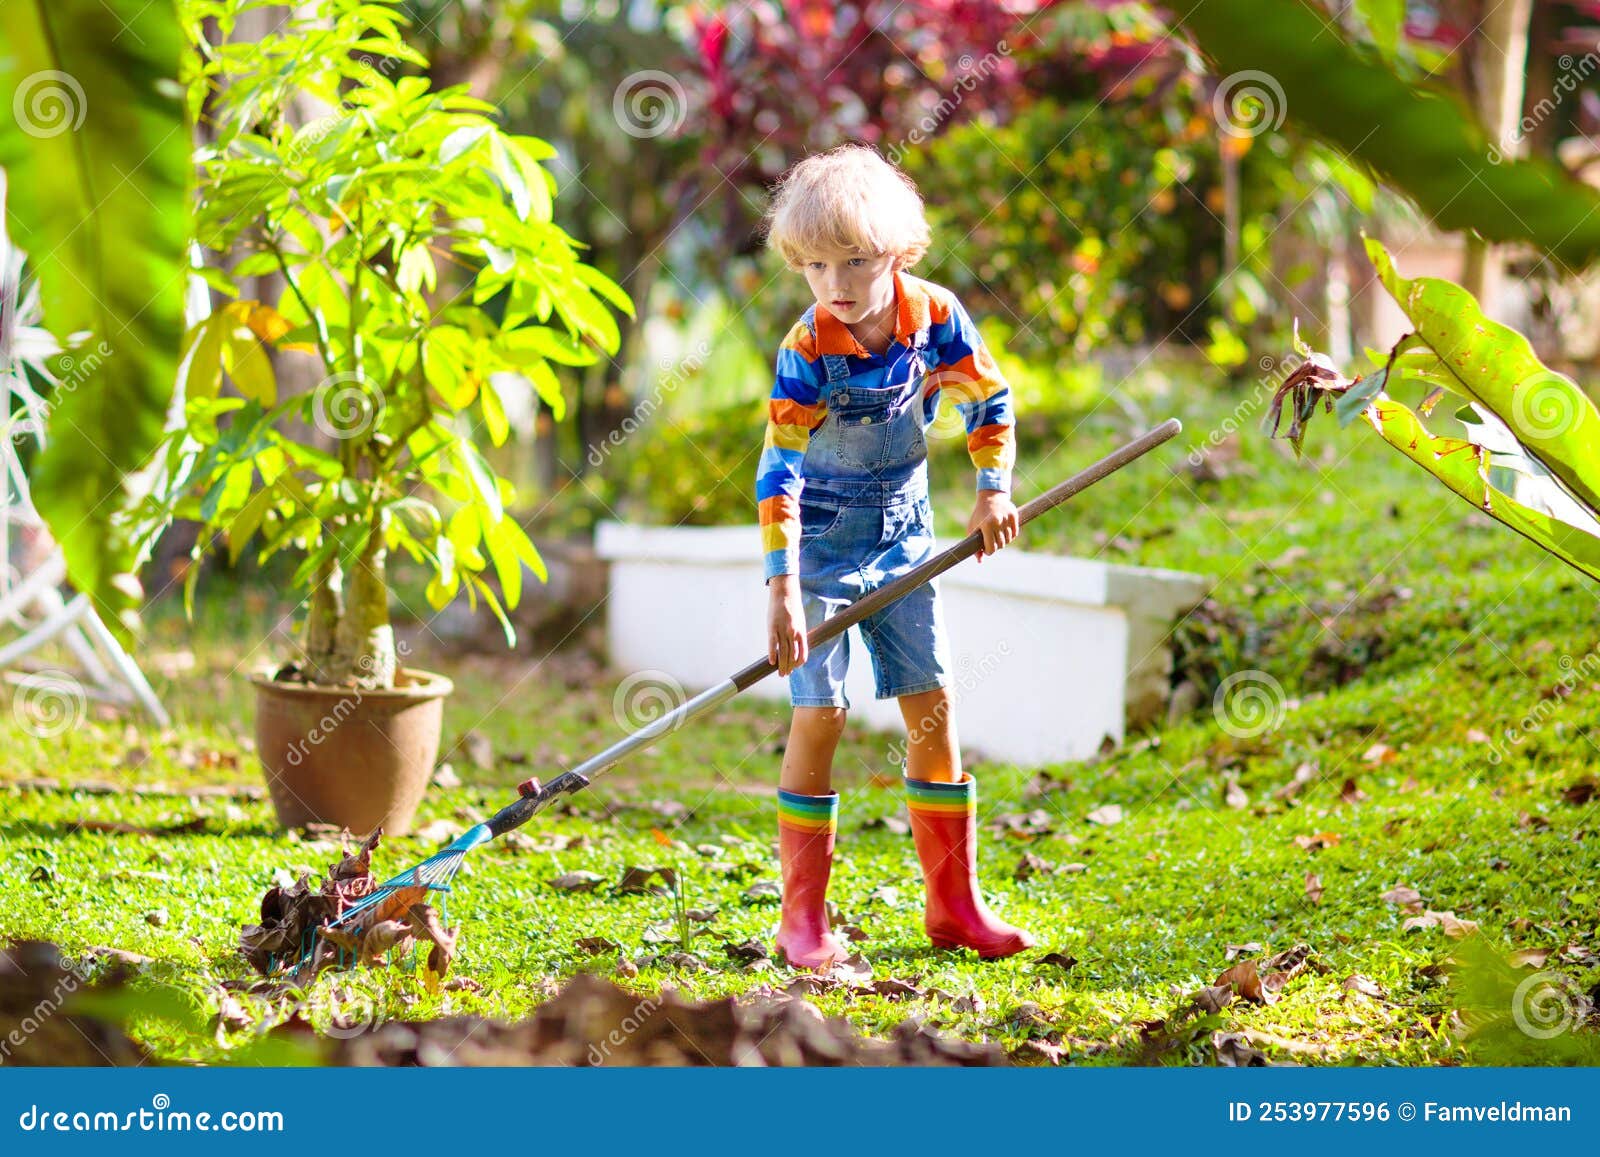 Child and Rake in Autumn Garden. Kid Raking Leaves Stock Photo - Image ...